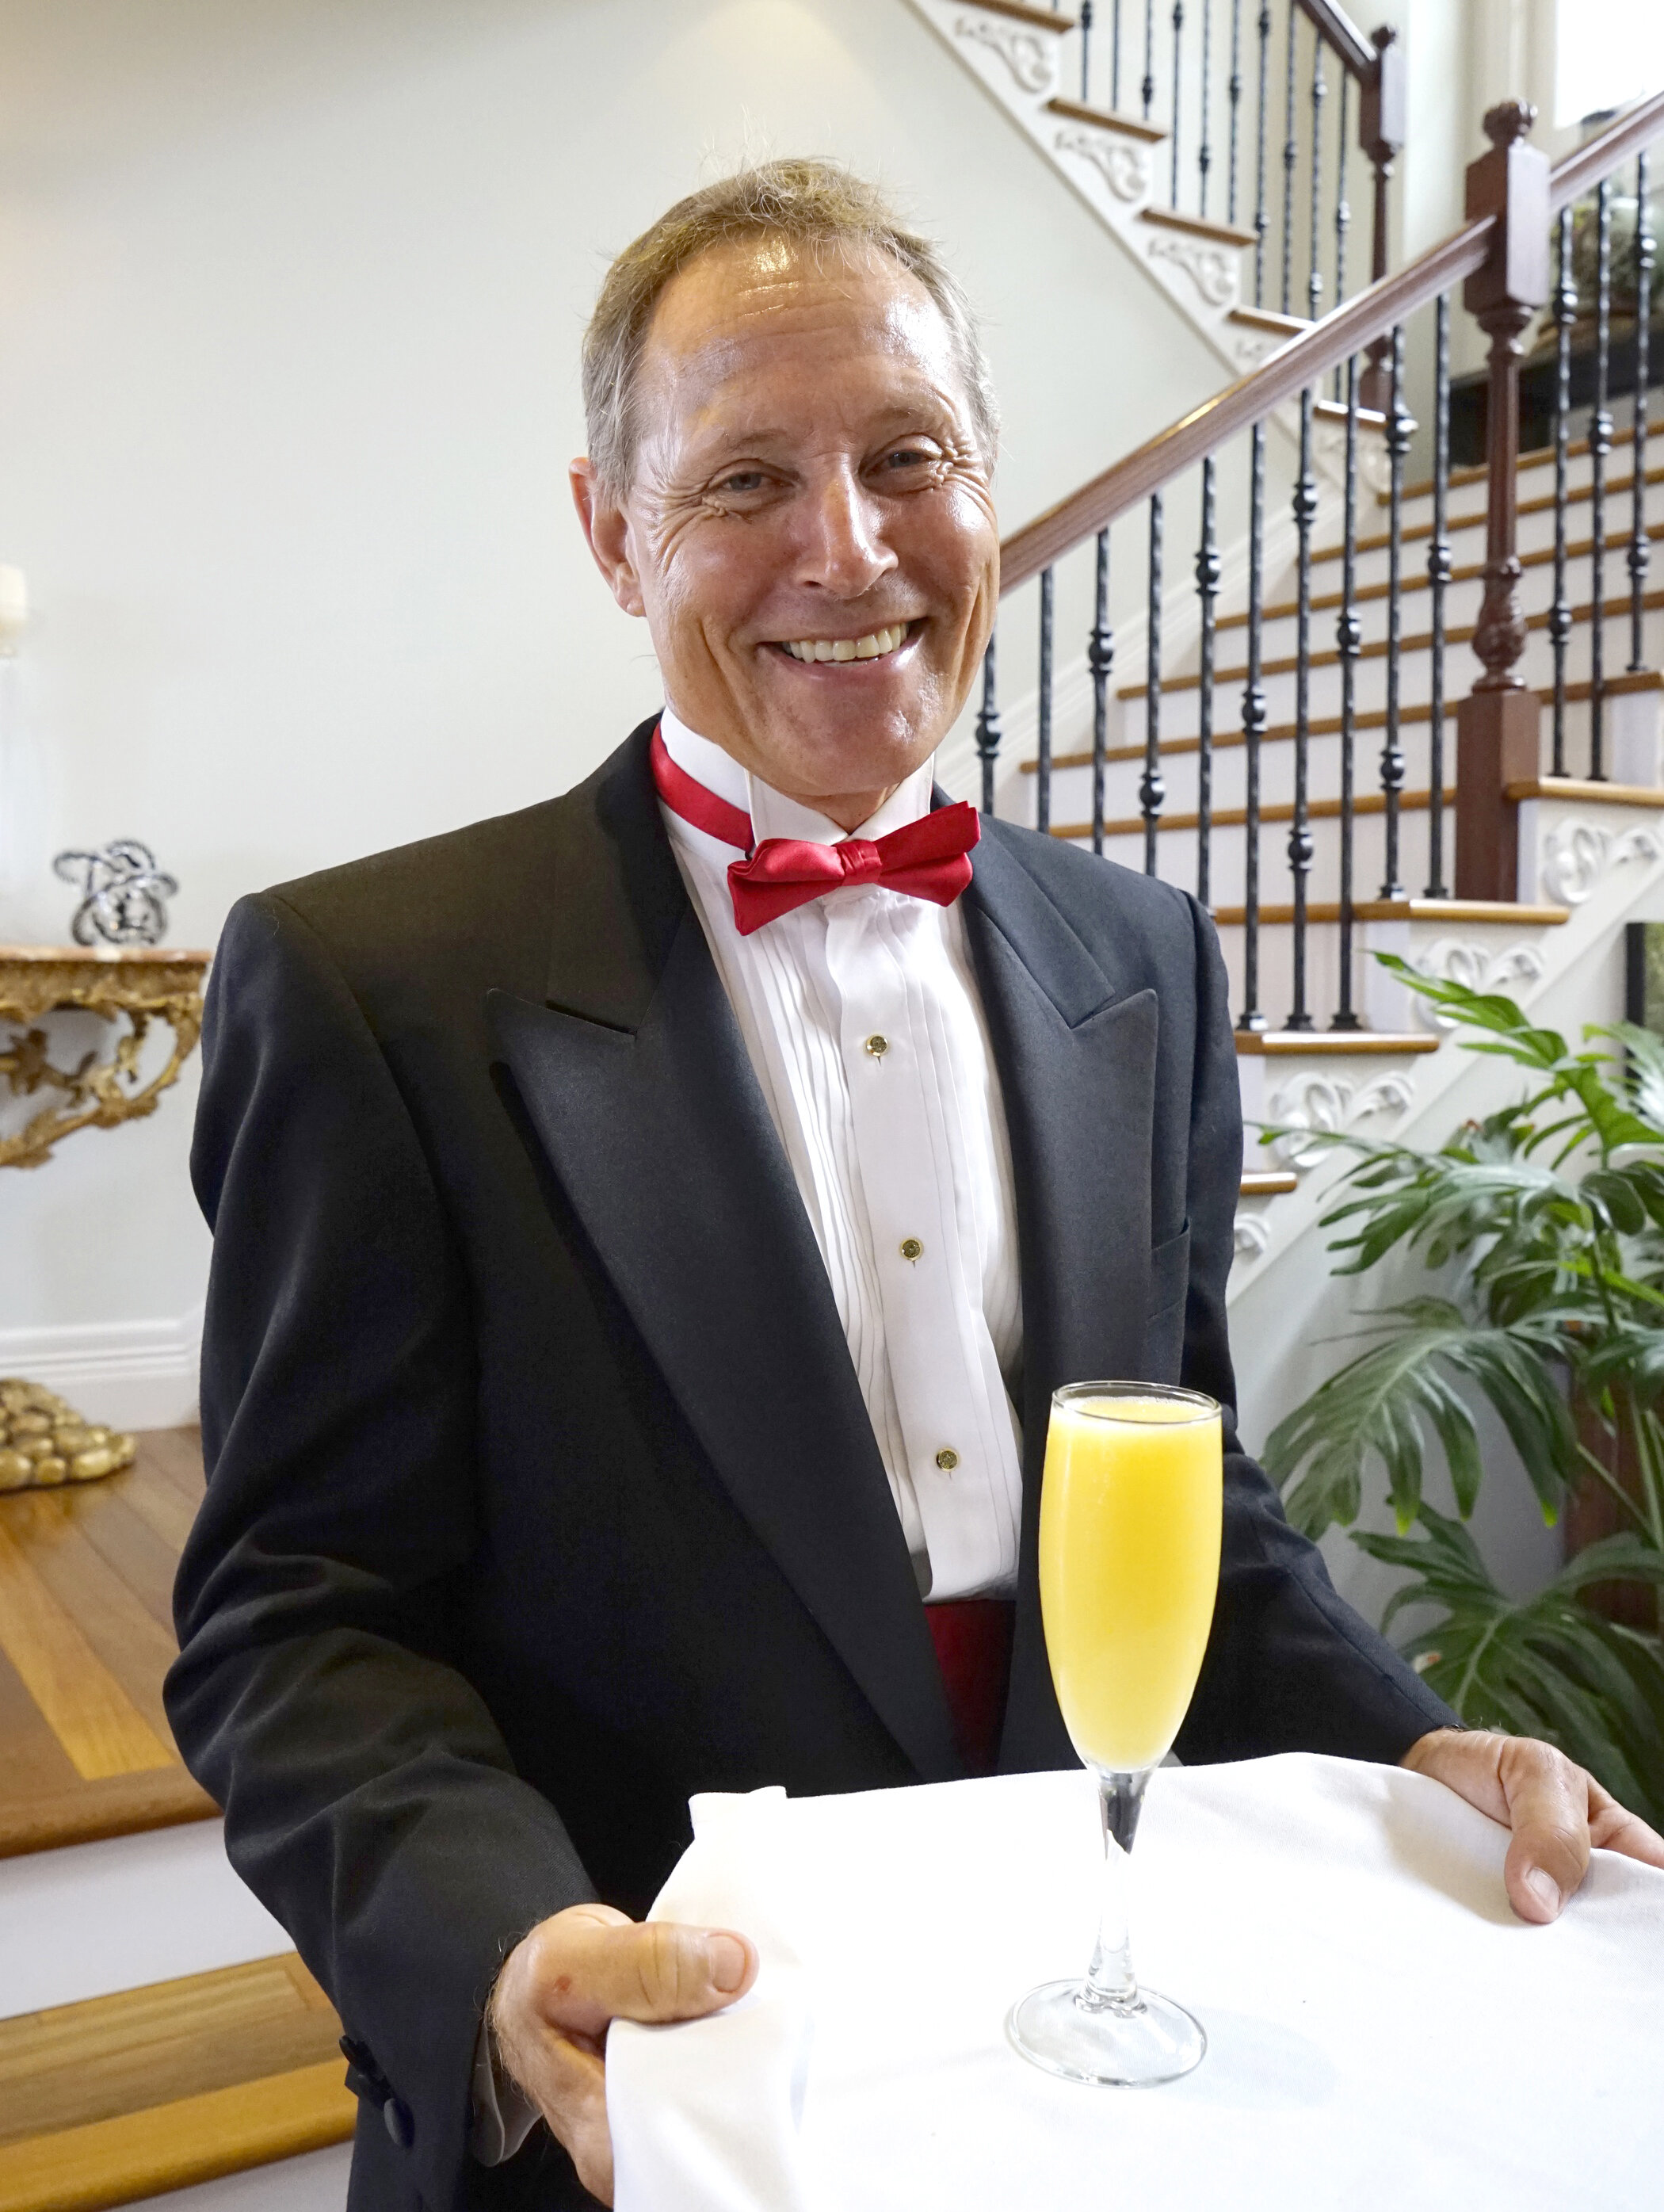  Dr. Bill Willard volunteered to serve mimosas 